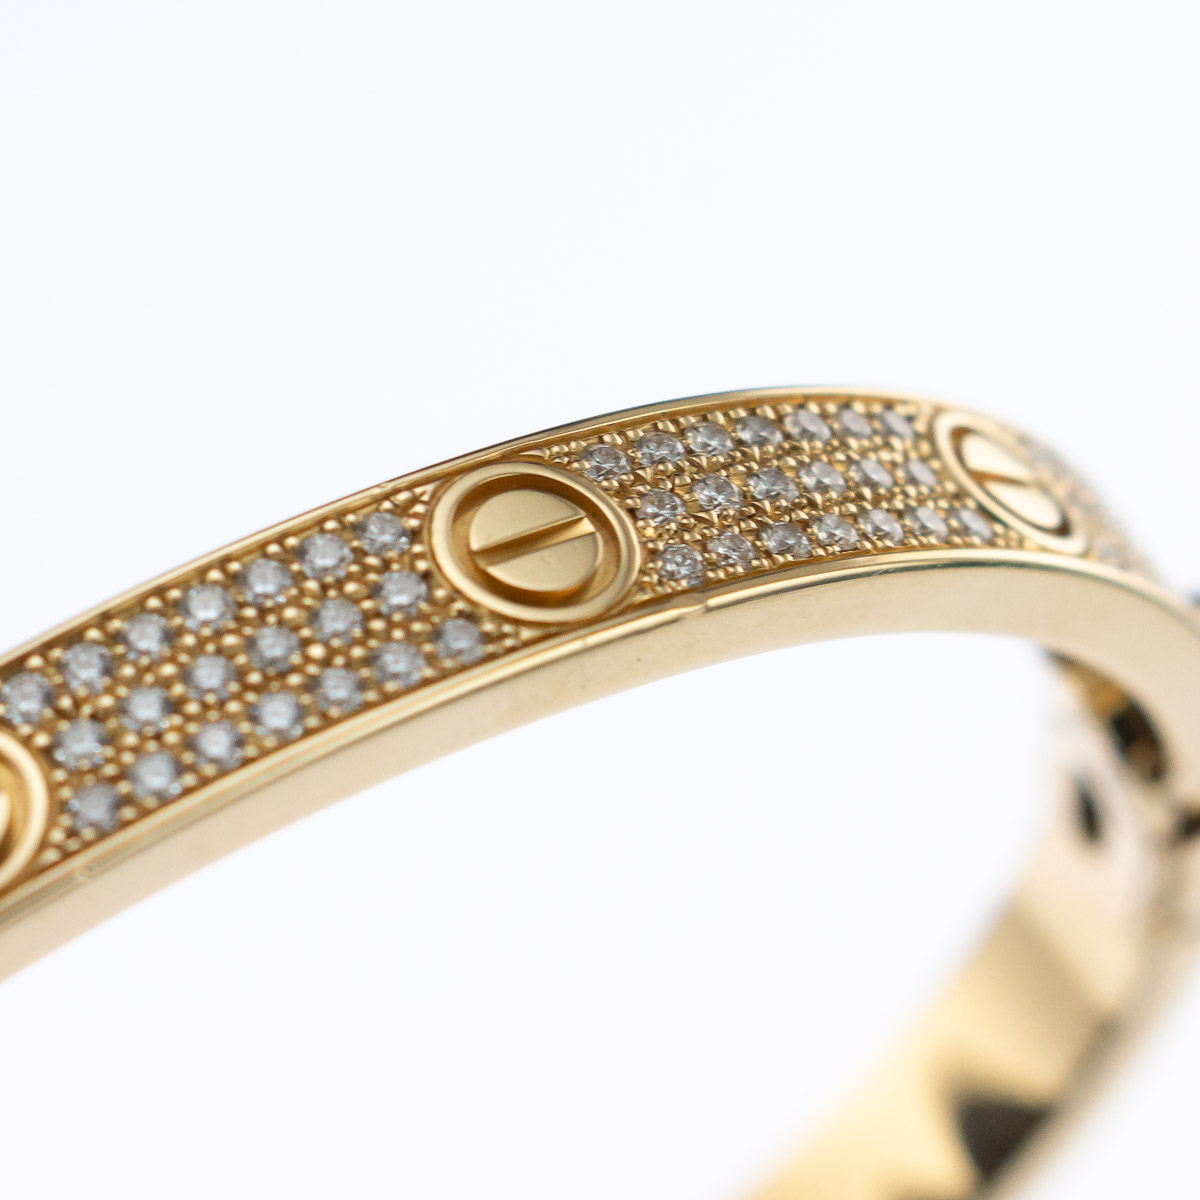 Details more than 65 cartier love bracelet diamonds latest - POPPY